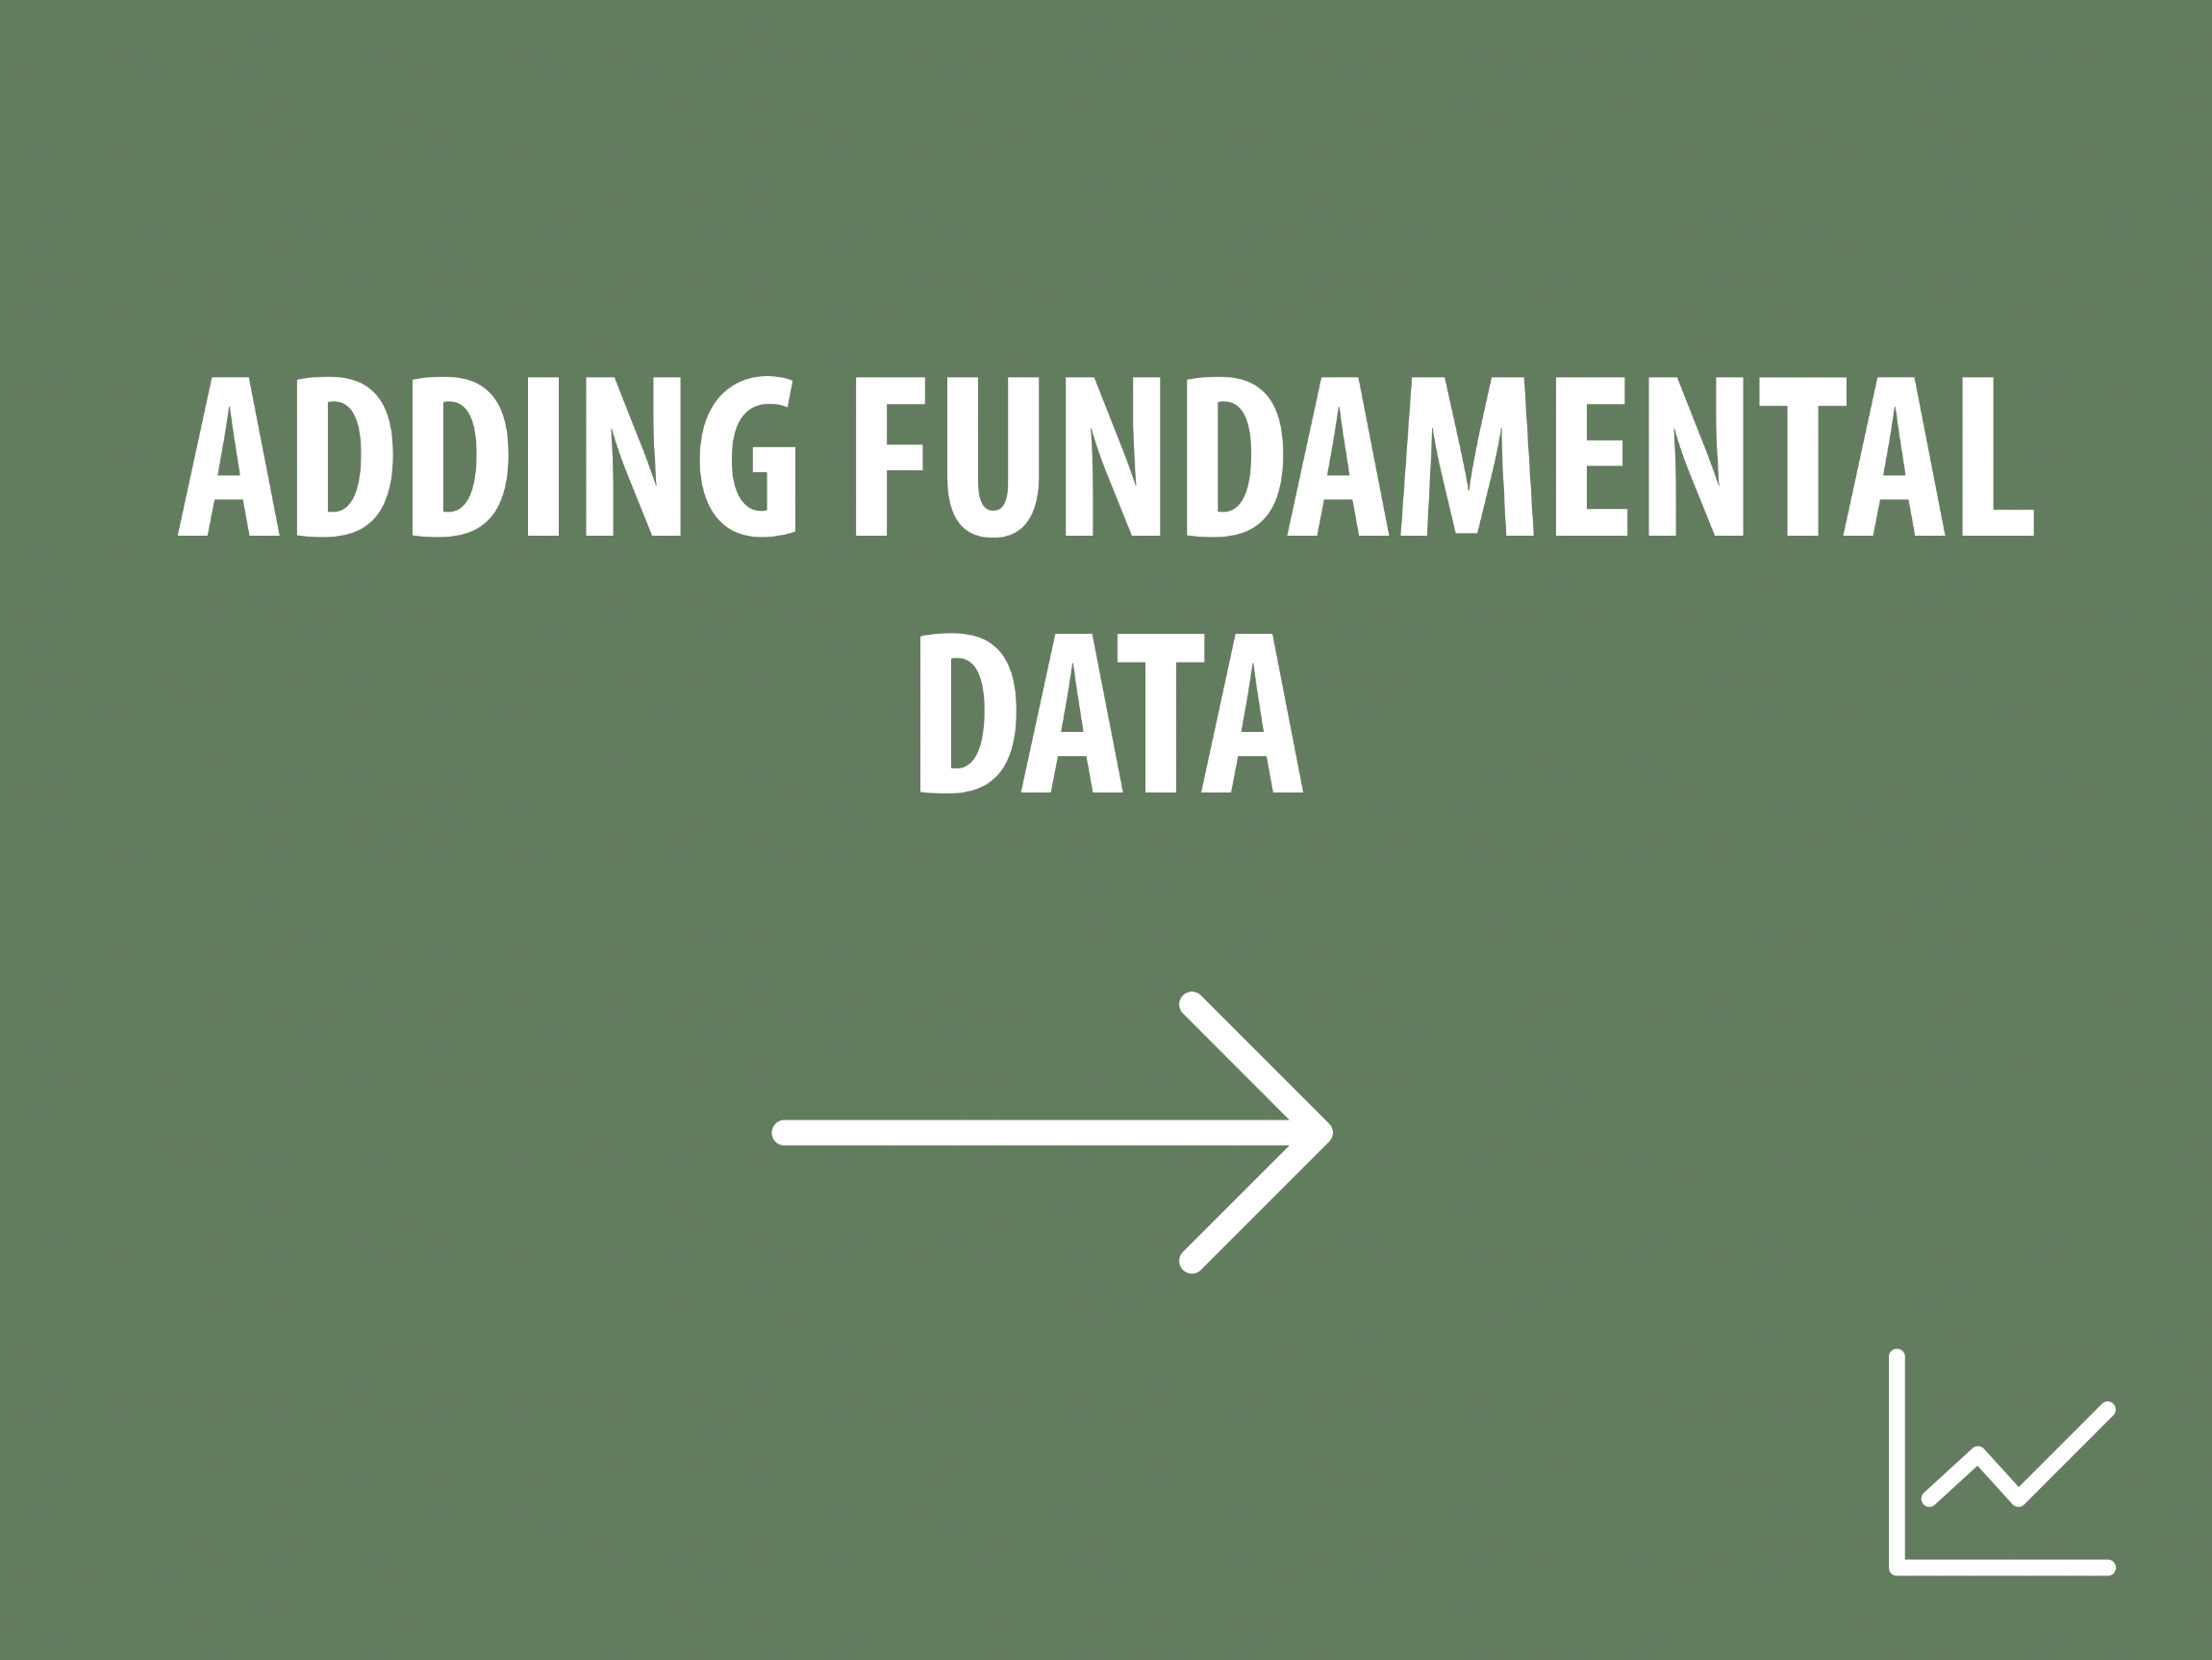 Adding Fundamental Data